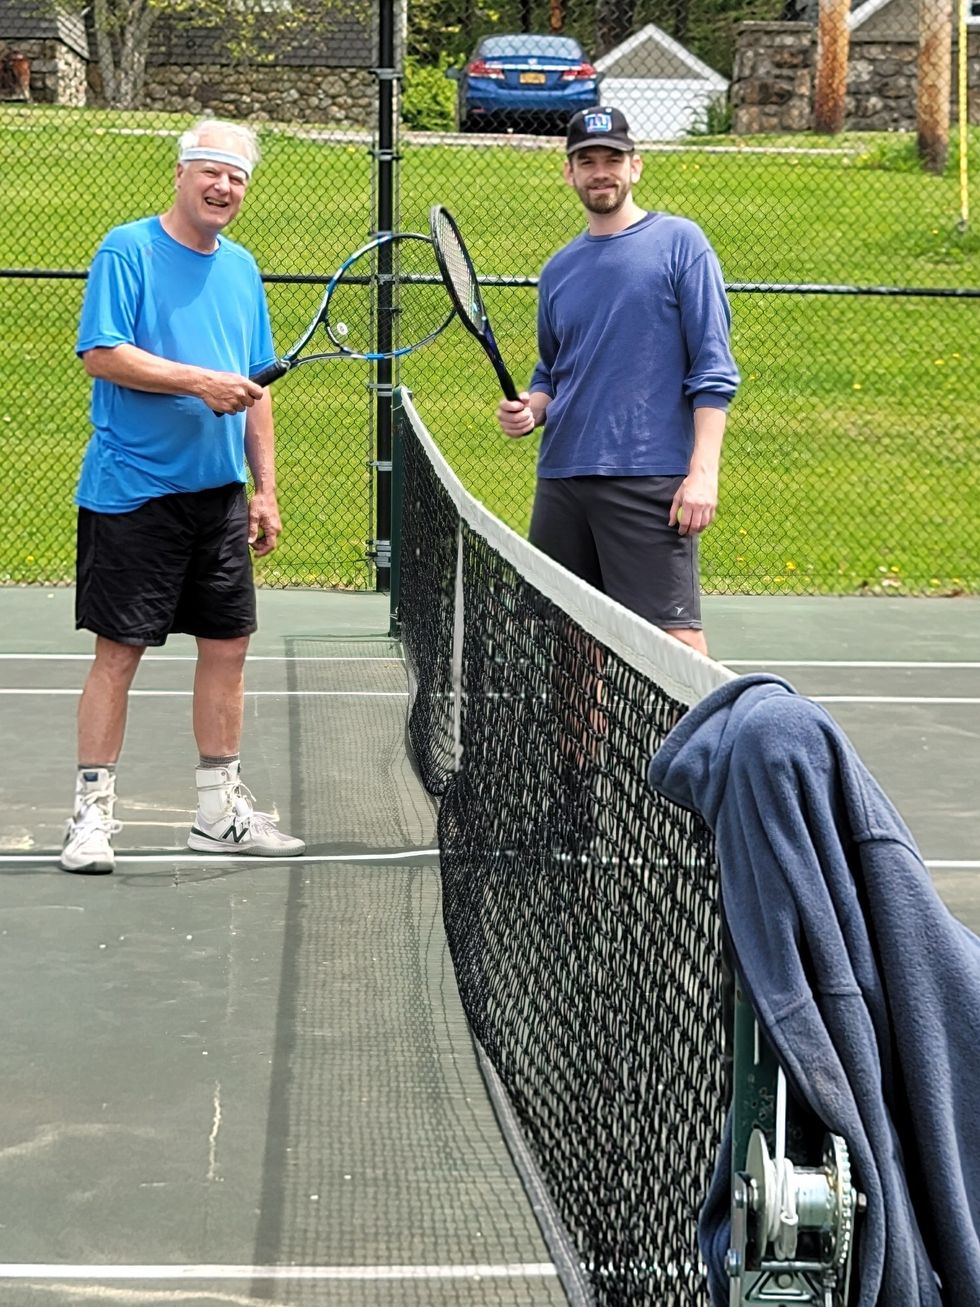 Village of Millbrook raises more than $23K to repair tennis court